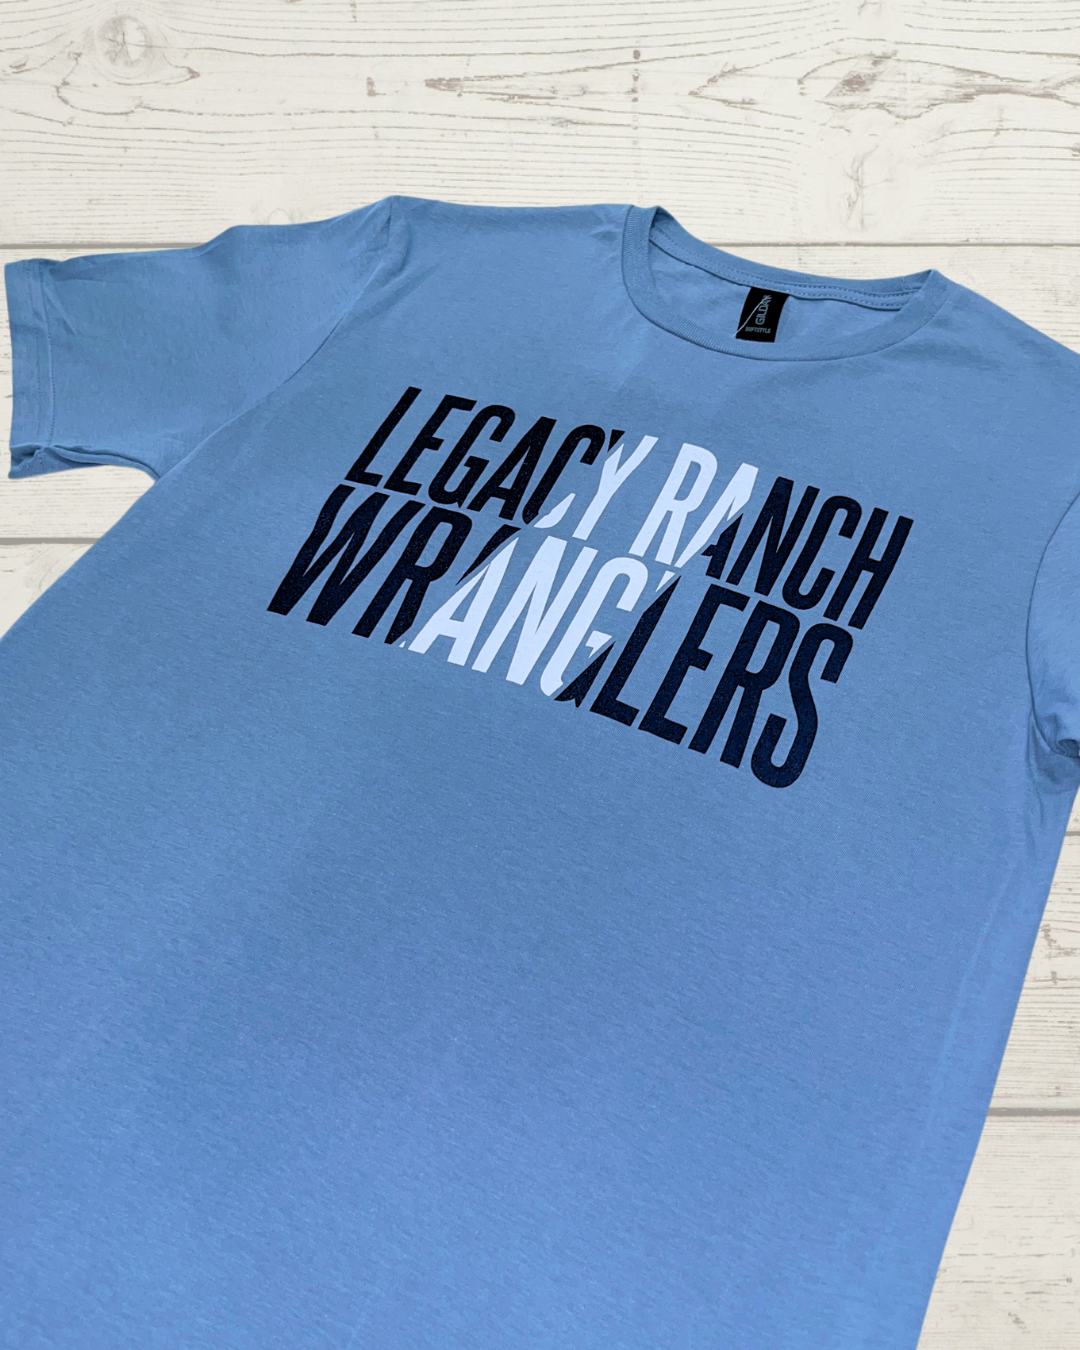 Gildan Softstyle Legacy Ranch Wranglers T-shirt